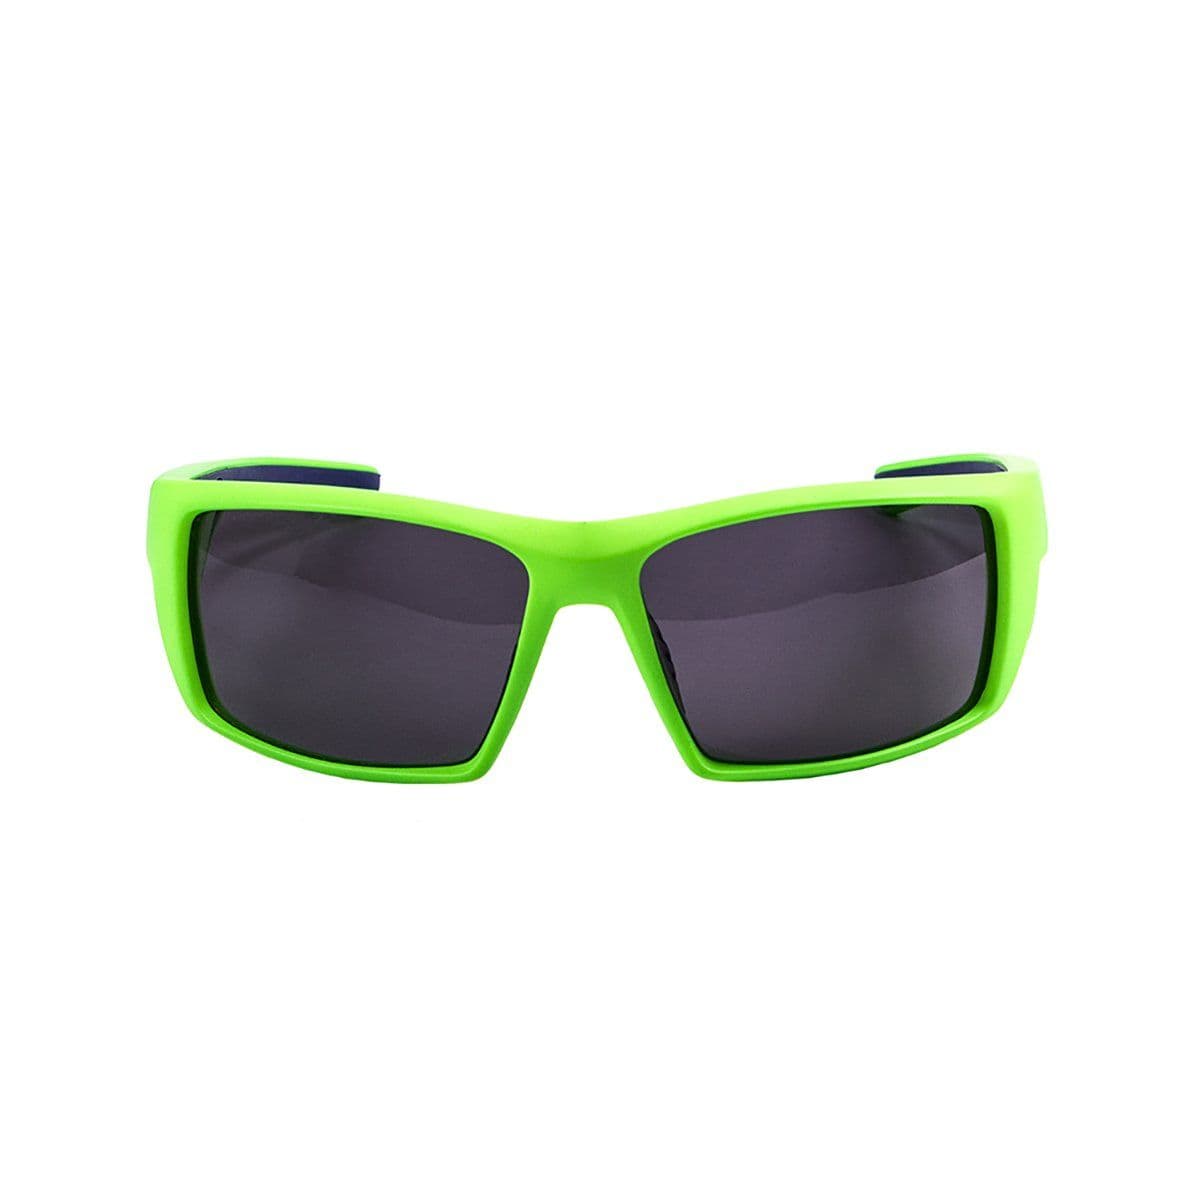 Ocean Aruba Water Sport Sunglasses